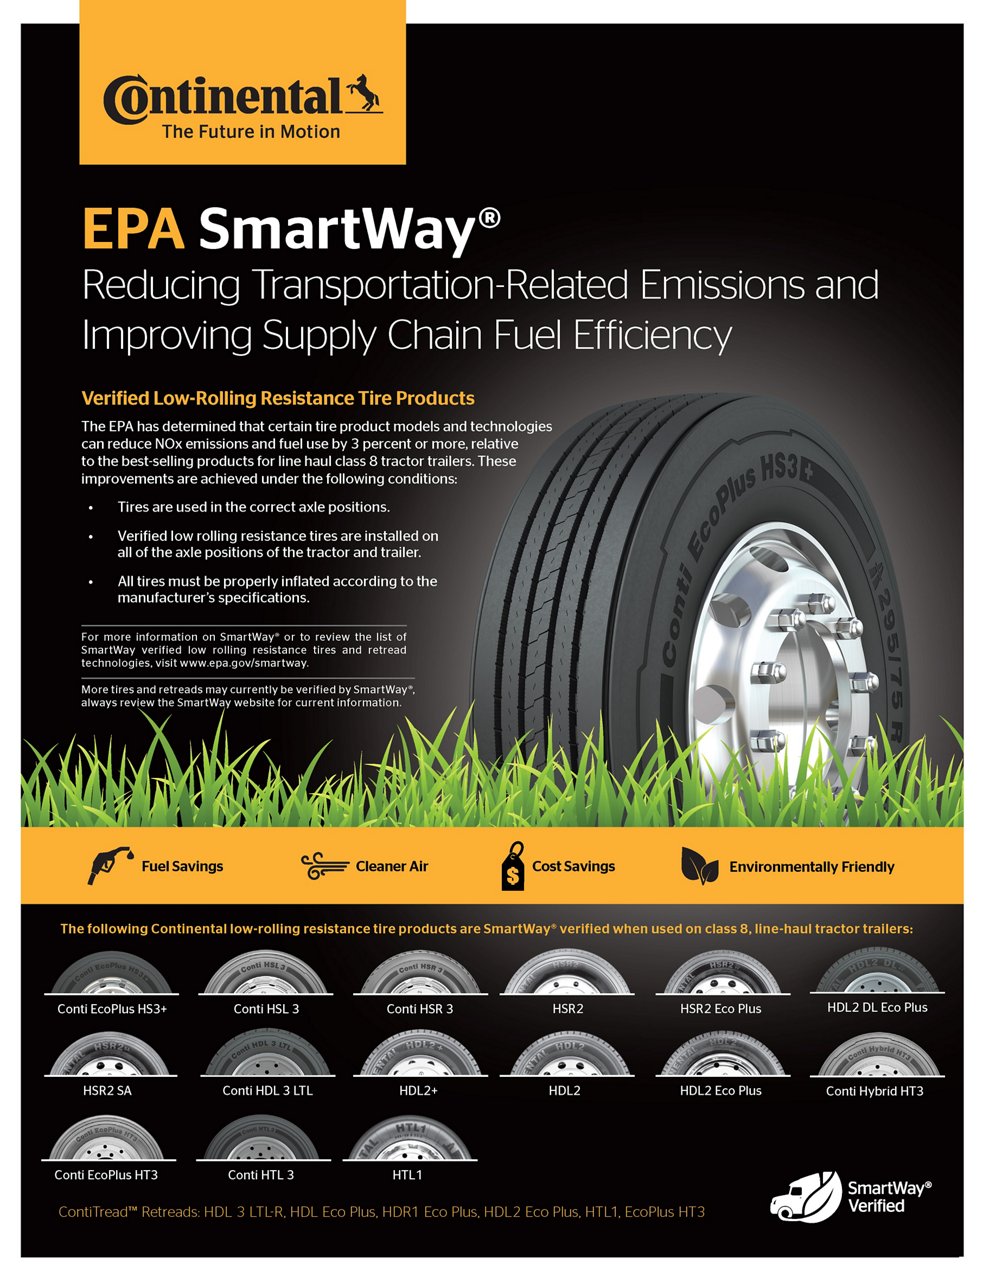 Continental's SmartWay EPA Tires & Retreads